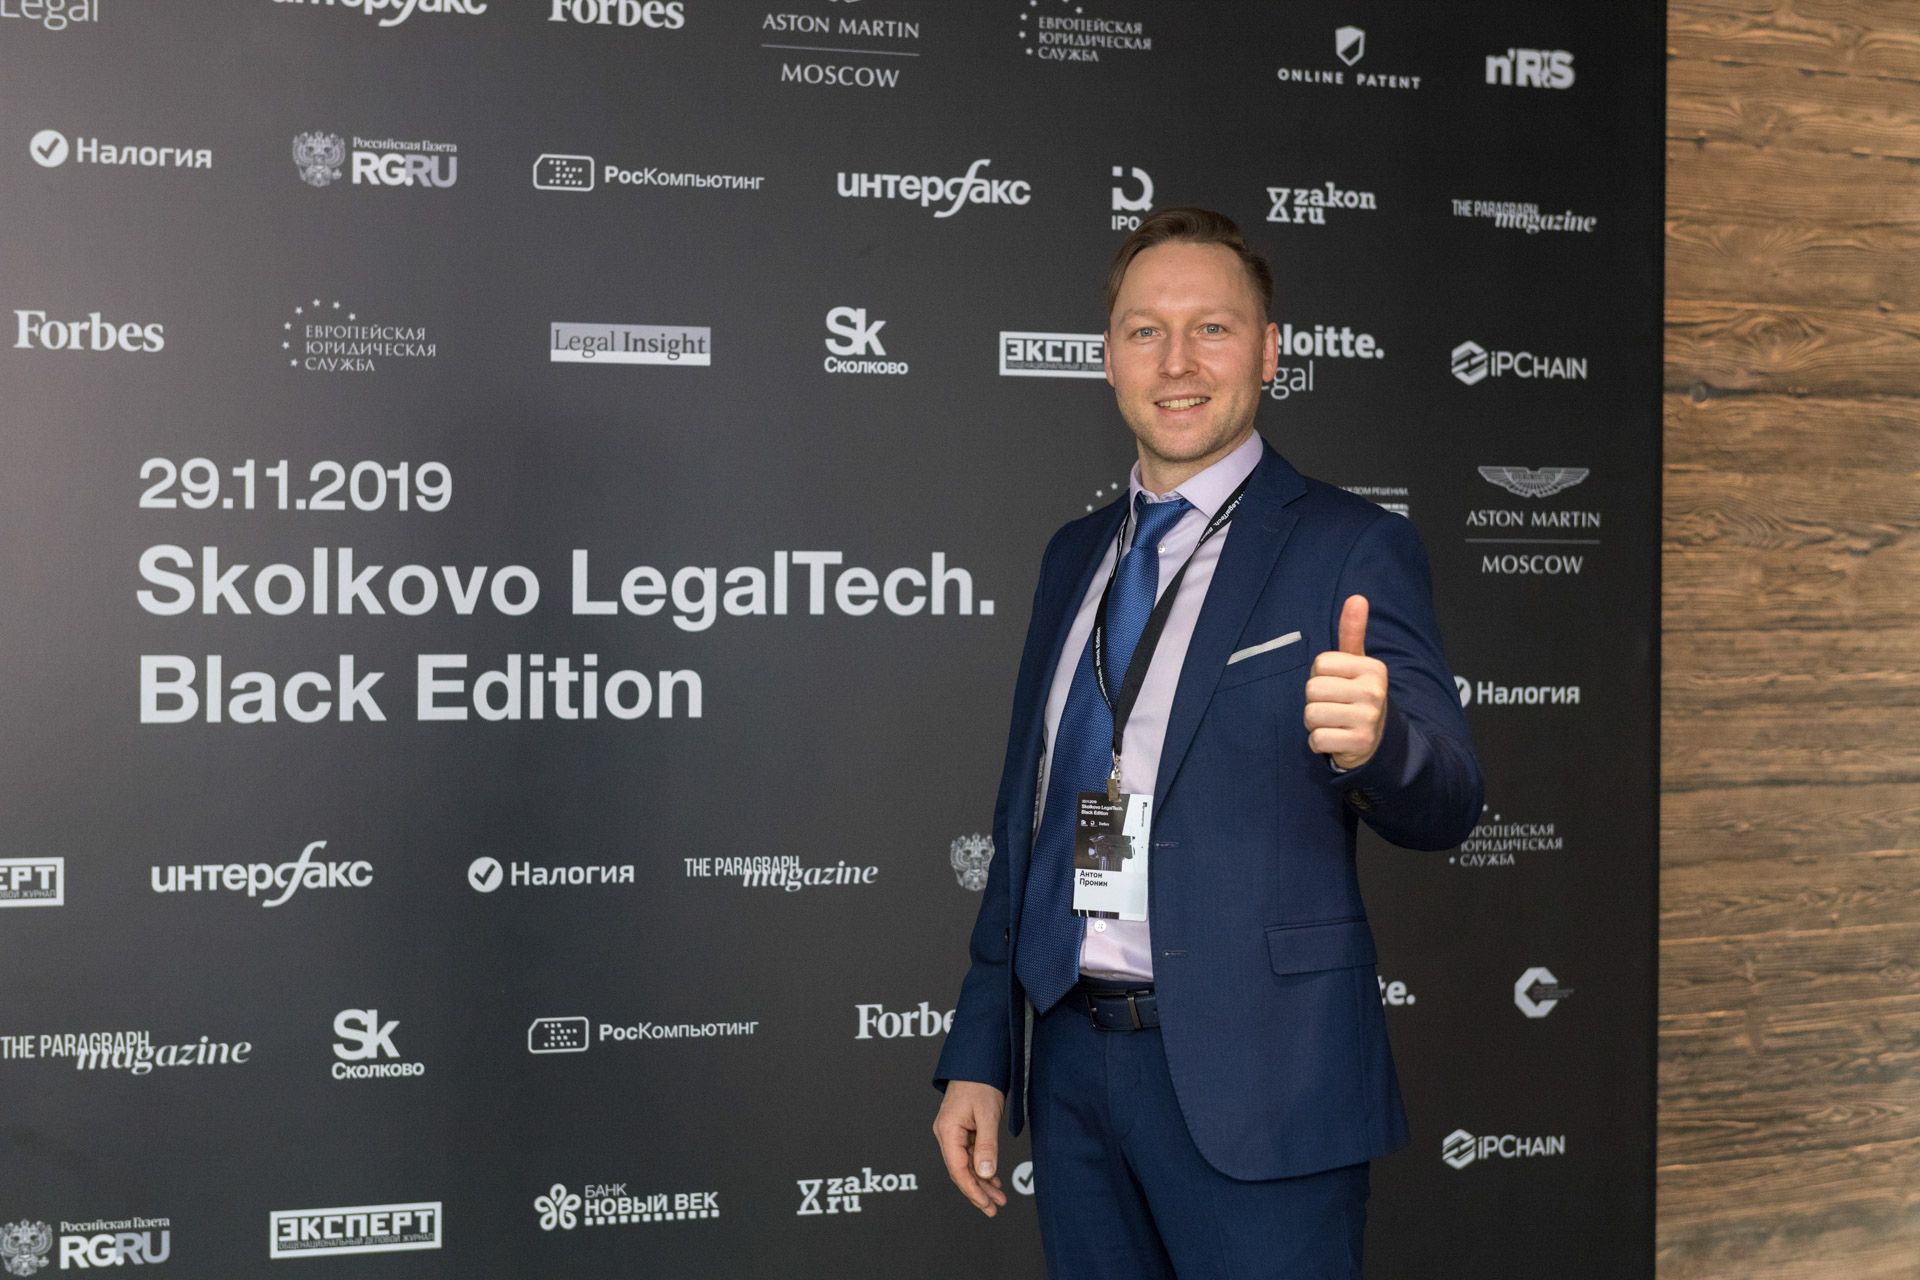 Skolkovo LegalTech 2019